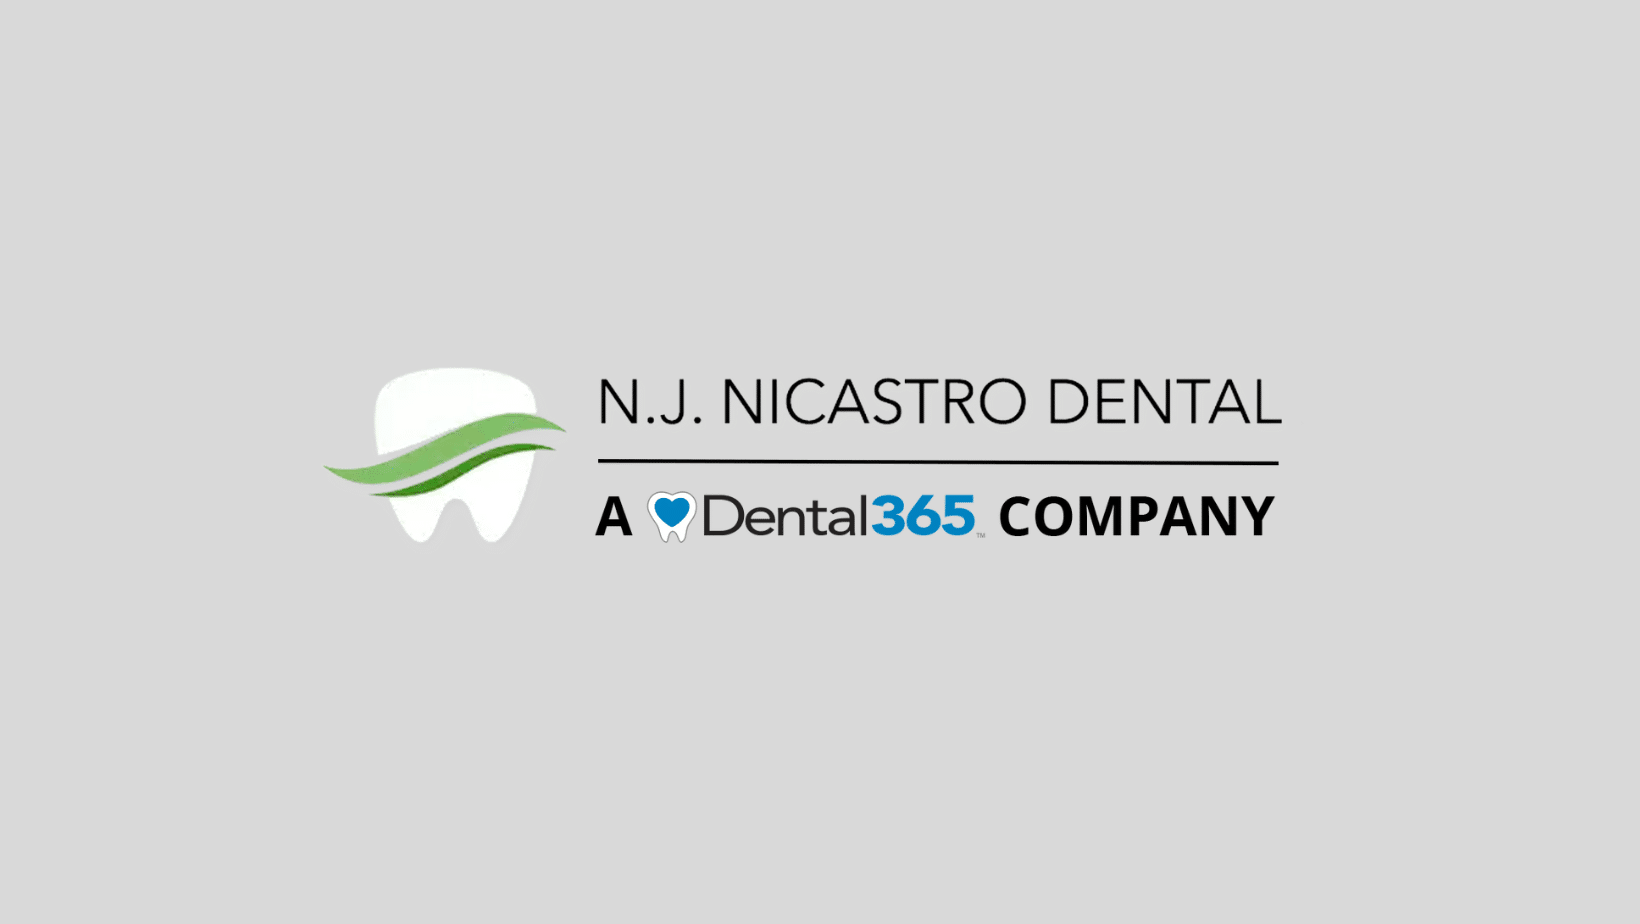 NJ Nicastro Dental - a Dental365 Company Logo